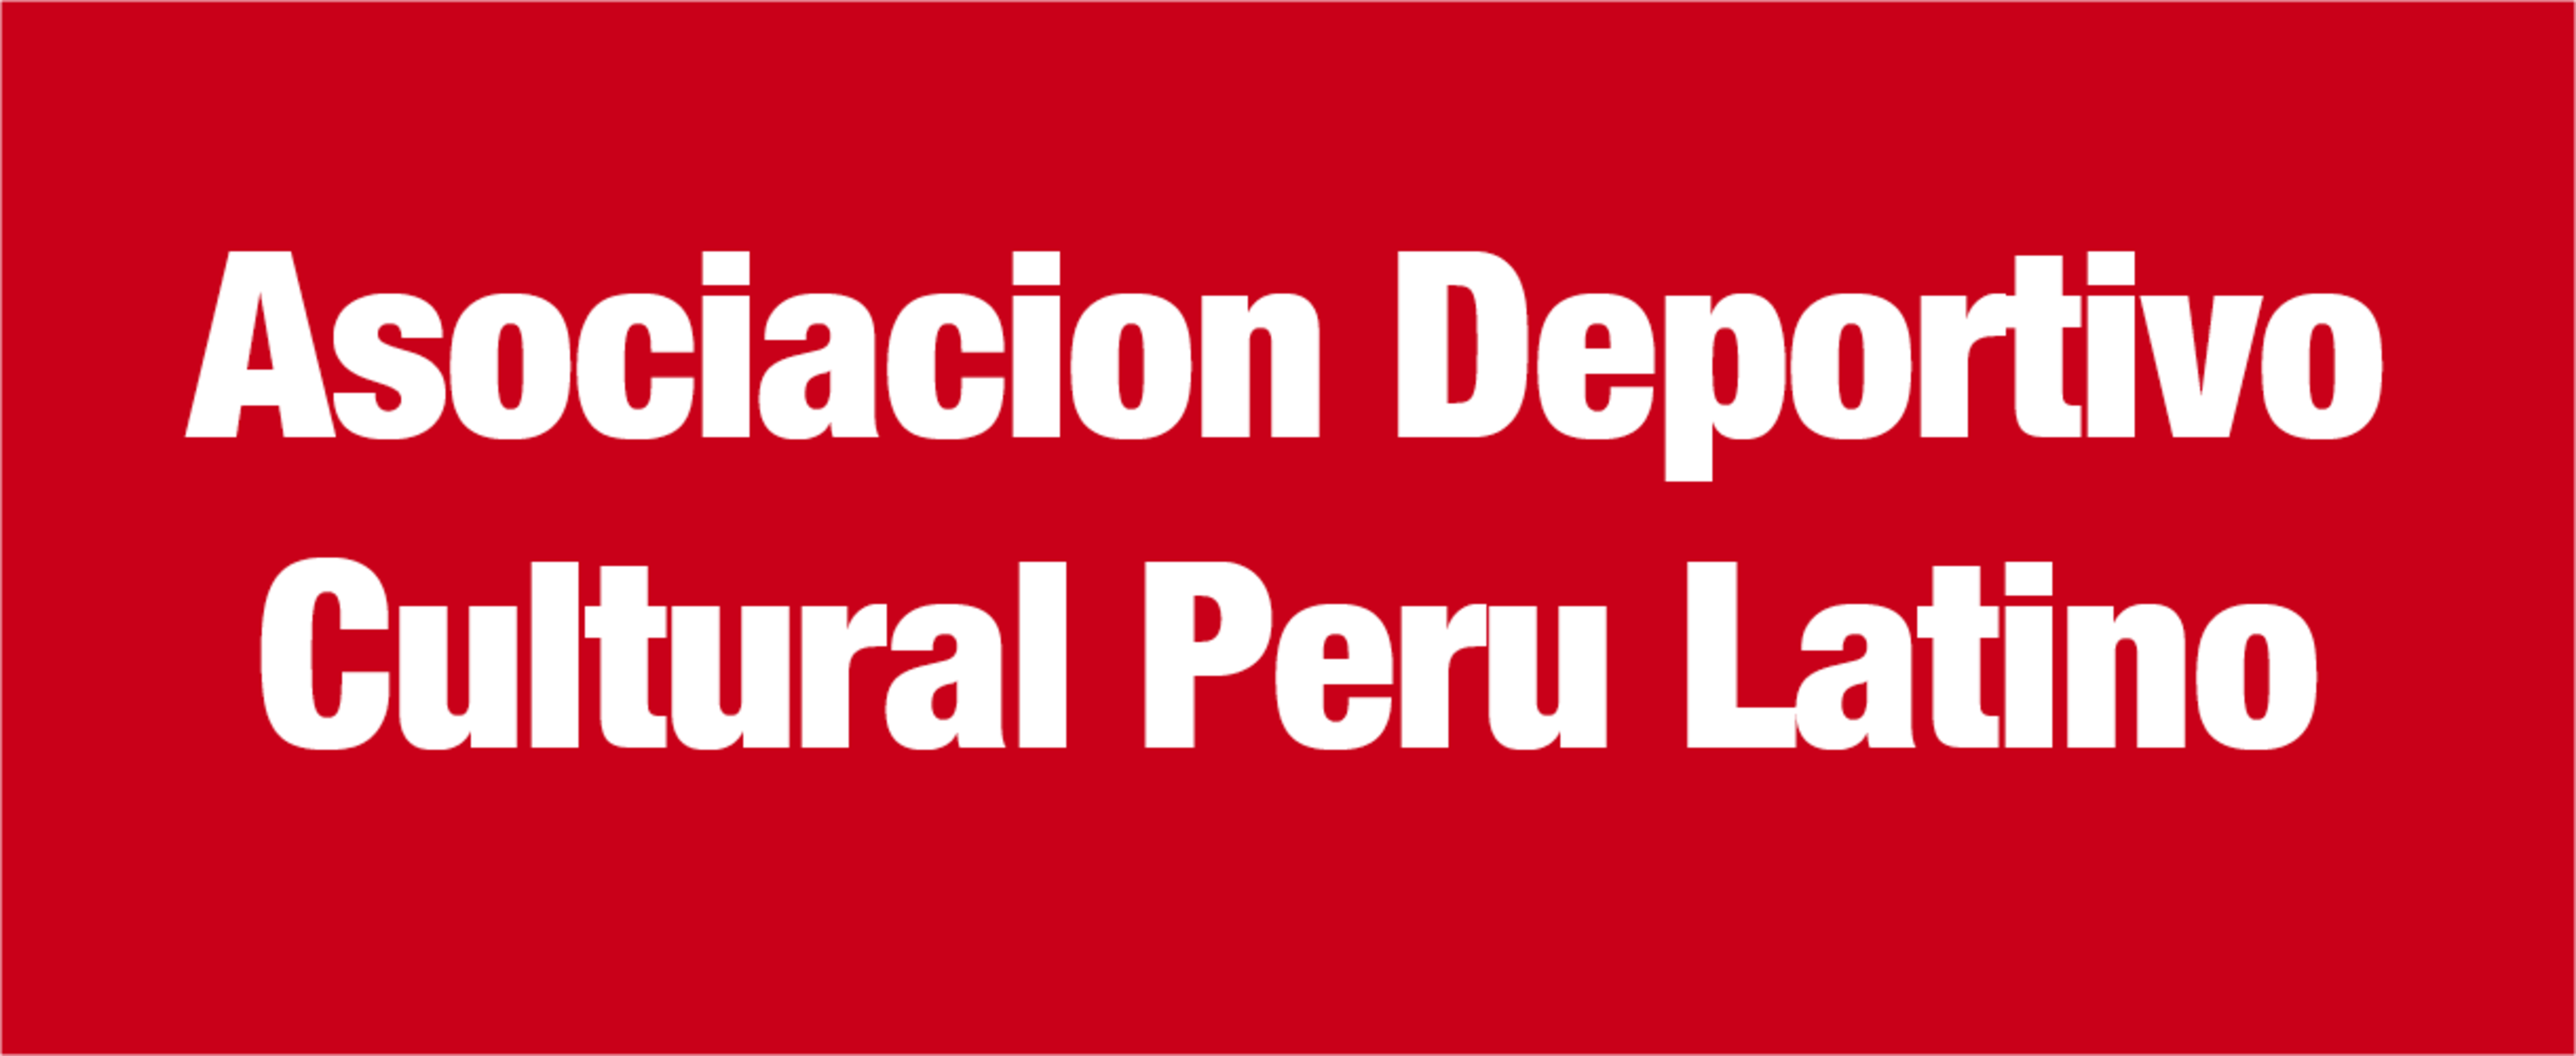 Asociacion Deportivo Cultural Peru Latino